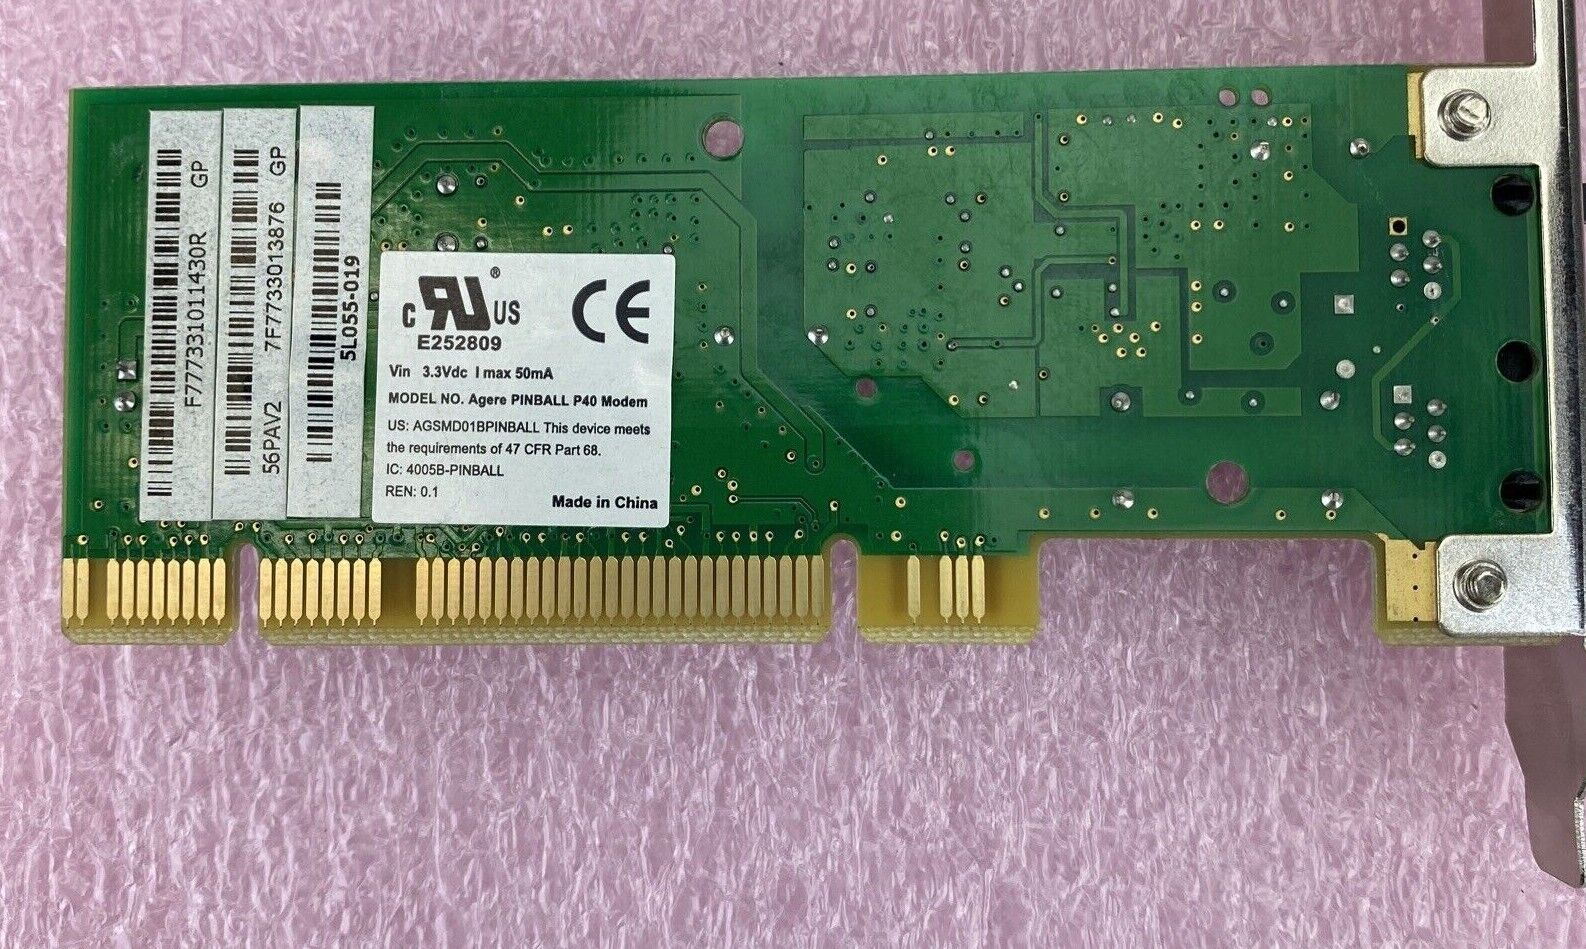 Lot of 3 Agere Pinball P40 AGSMD01BPINBALL PCI 56k Fax Modem